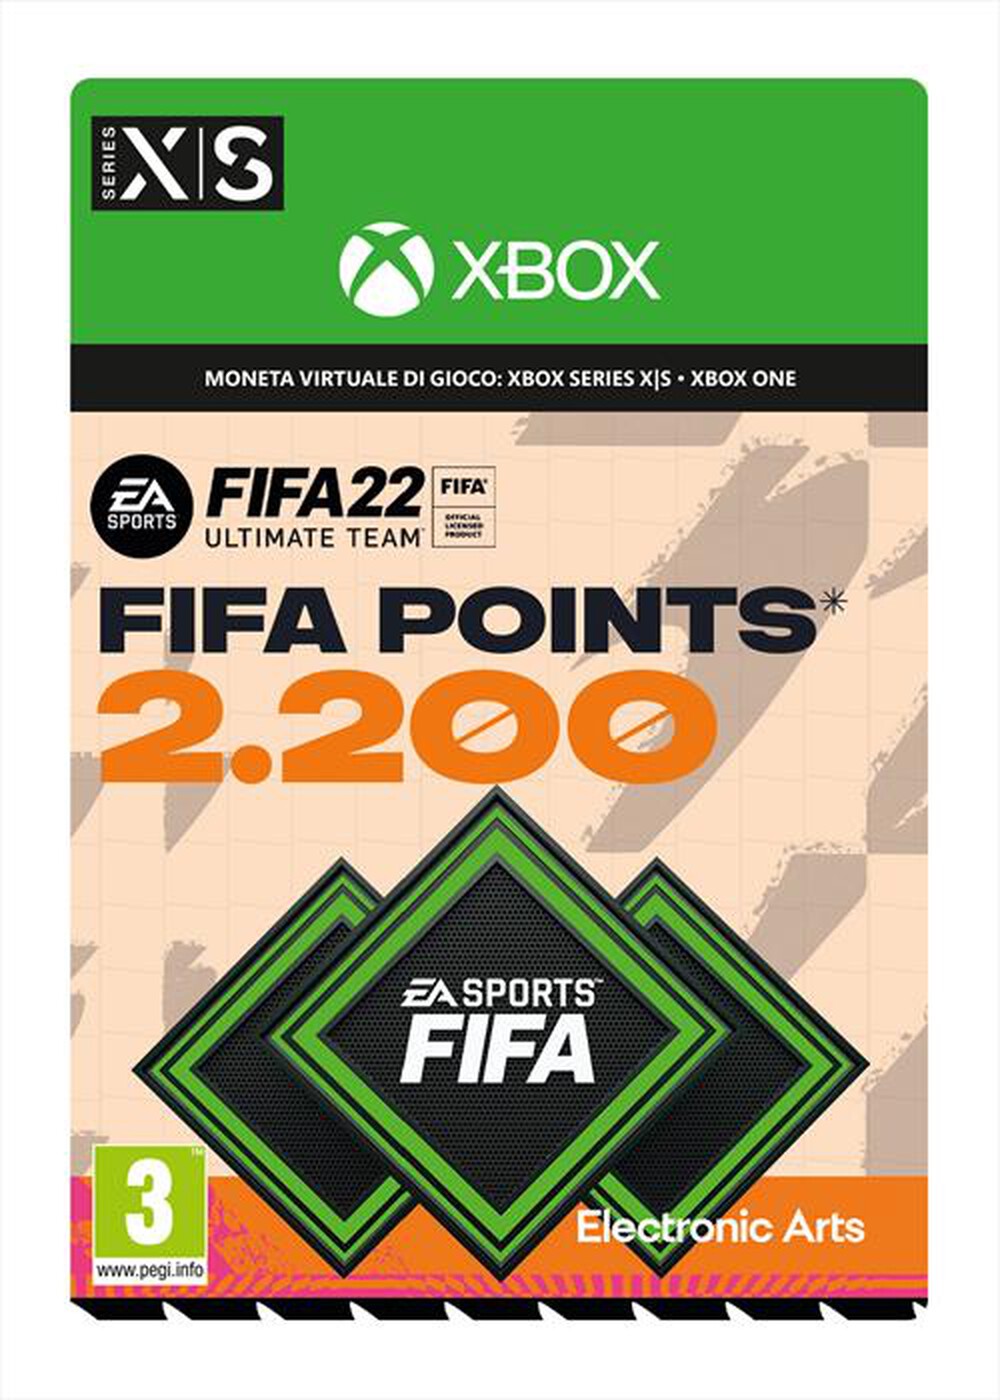 "MICROSOFT - FIFA 22 FUT 2200 Points"